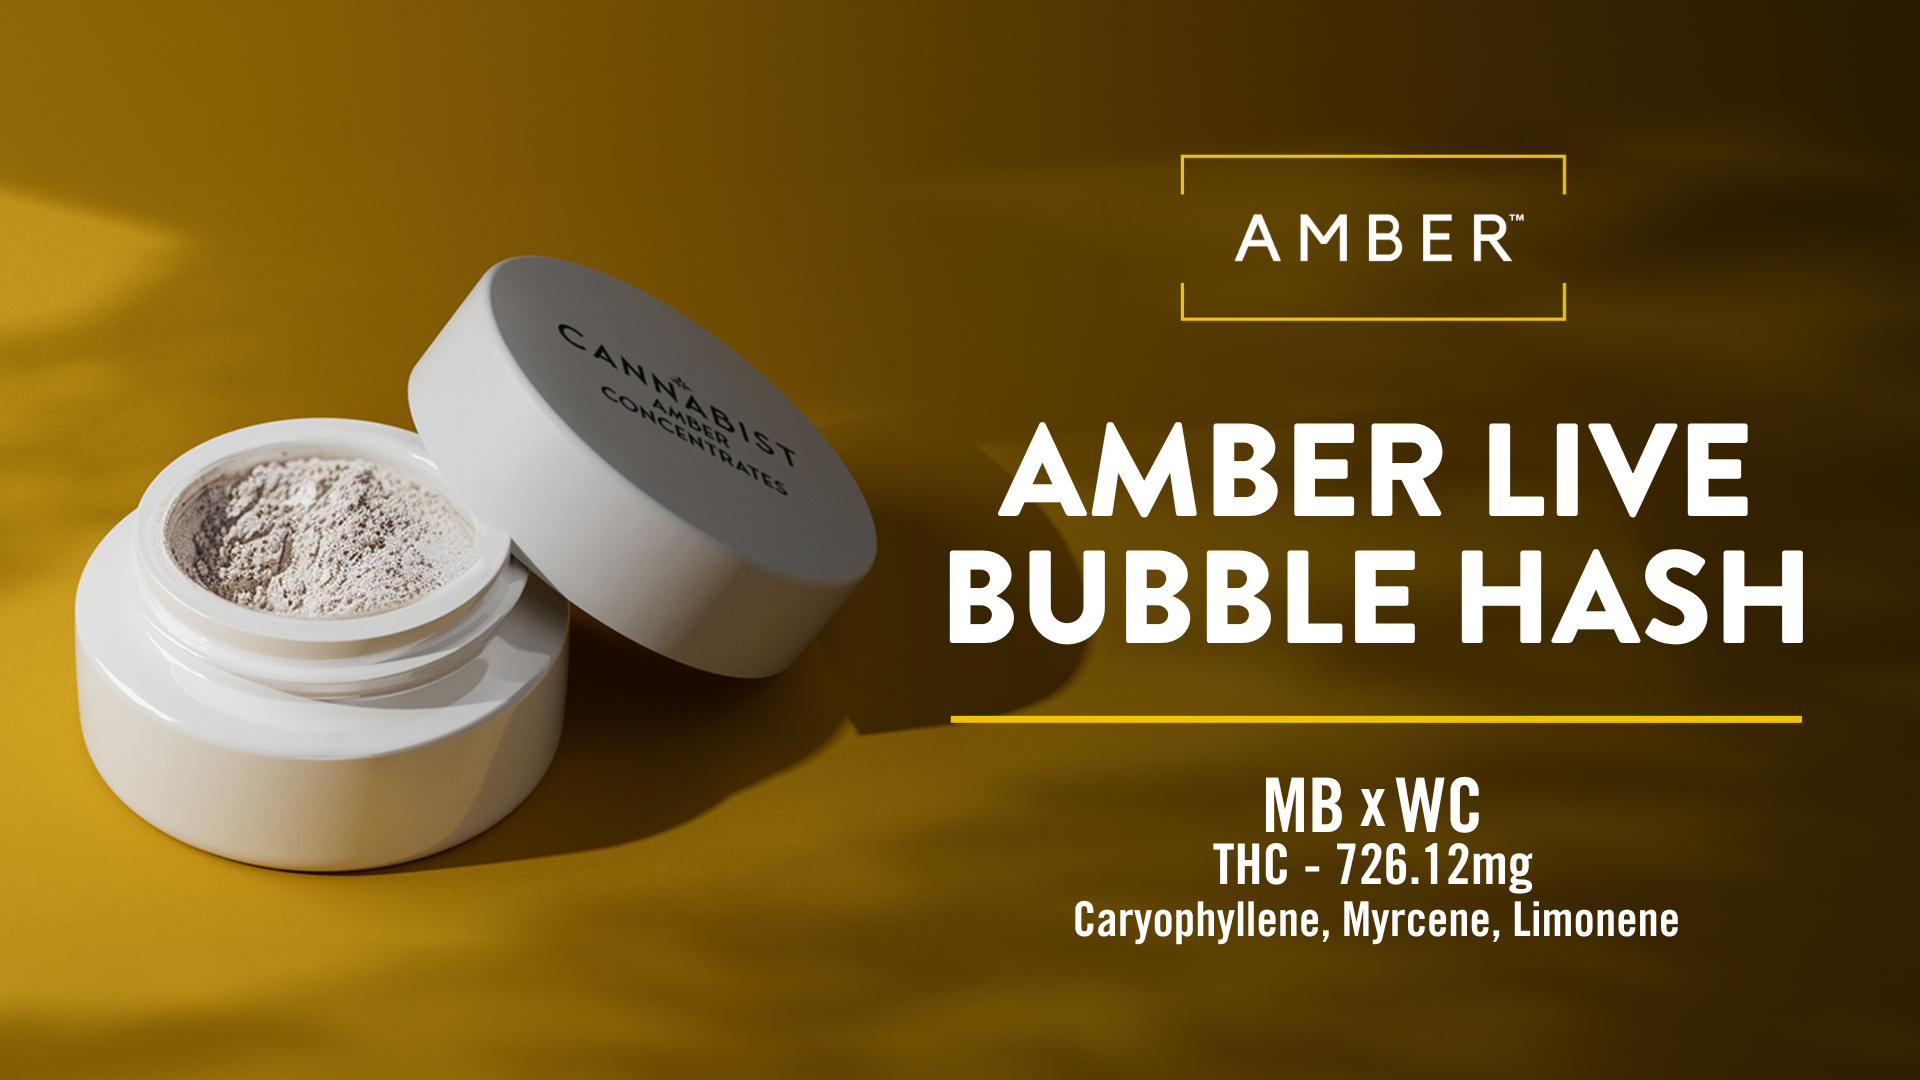 Copy of Amber Bubble Hash TV